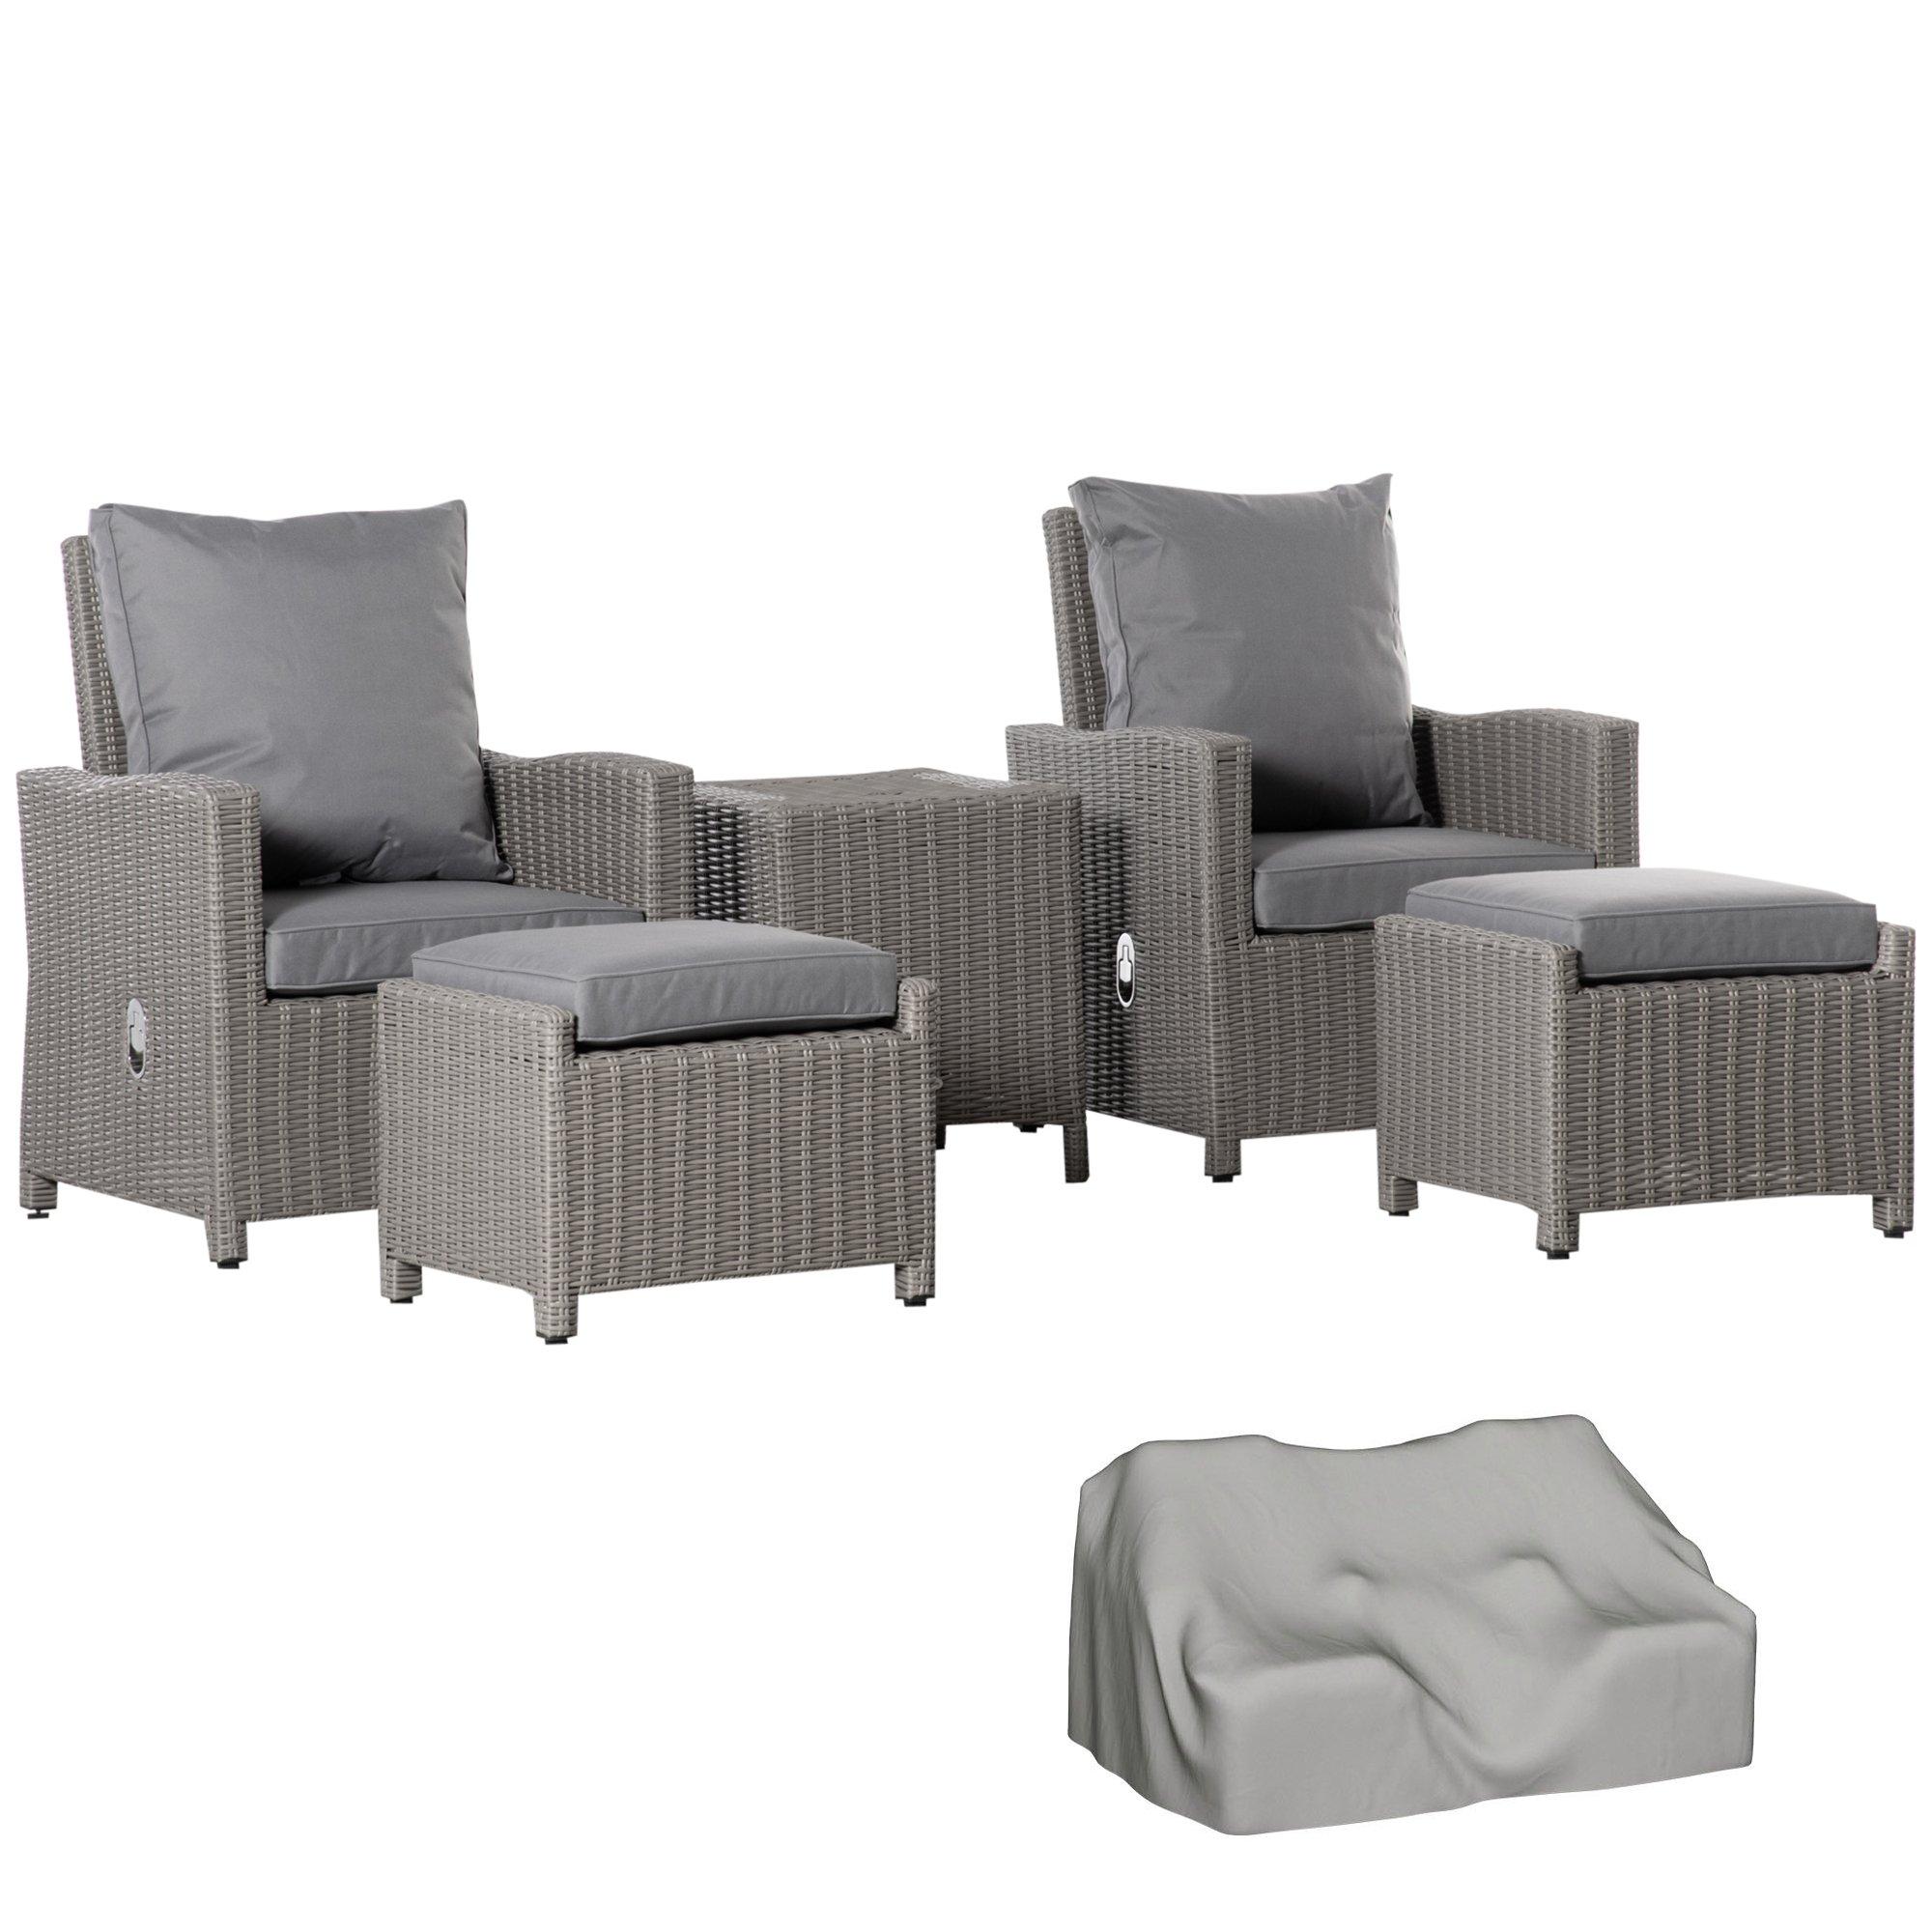 5 PCs Outdoor Garden Rattan Sofa Lounge Footstool Cooler Bar Coffee Table  Set